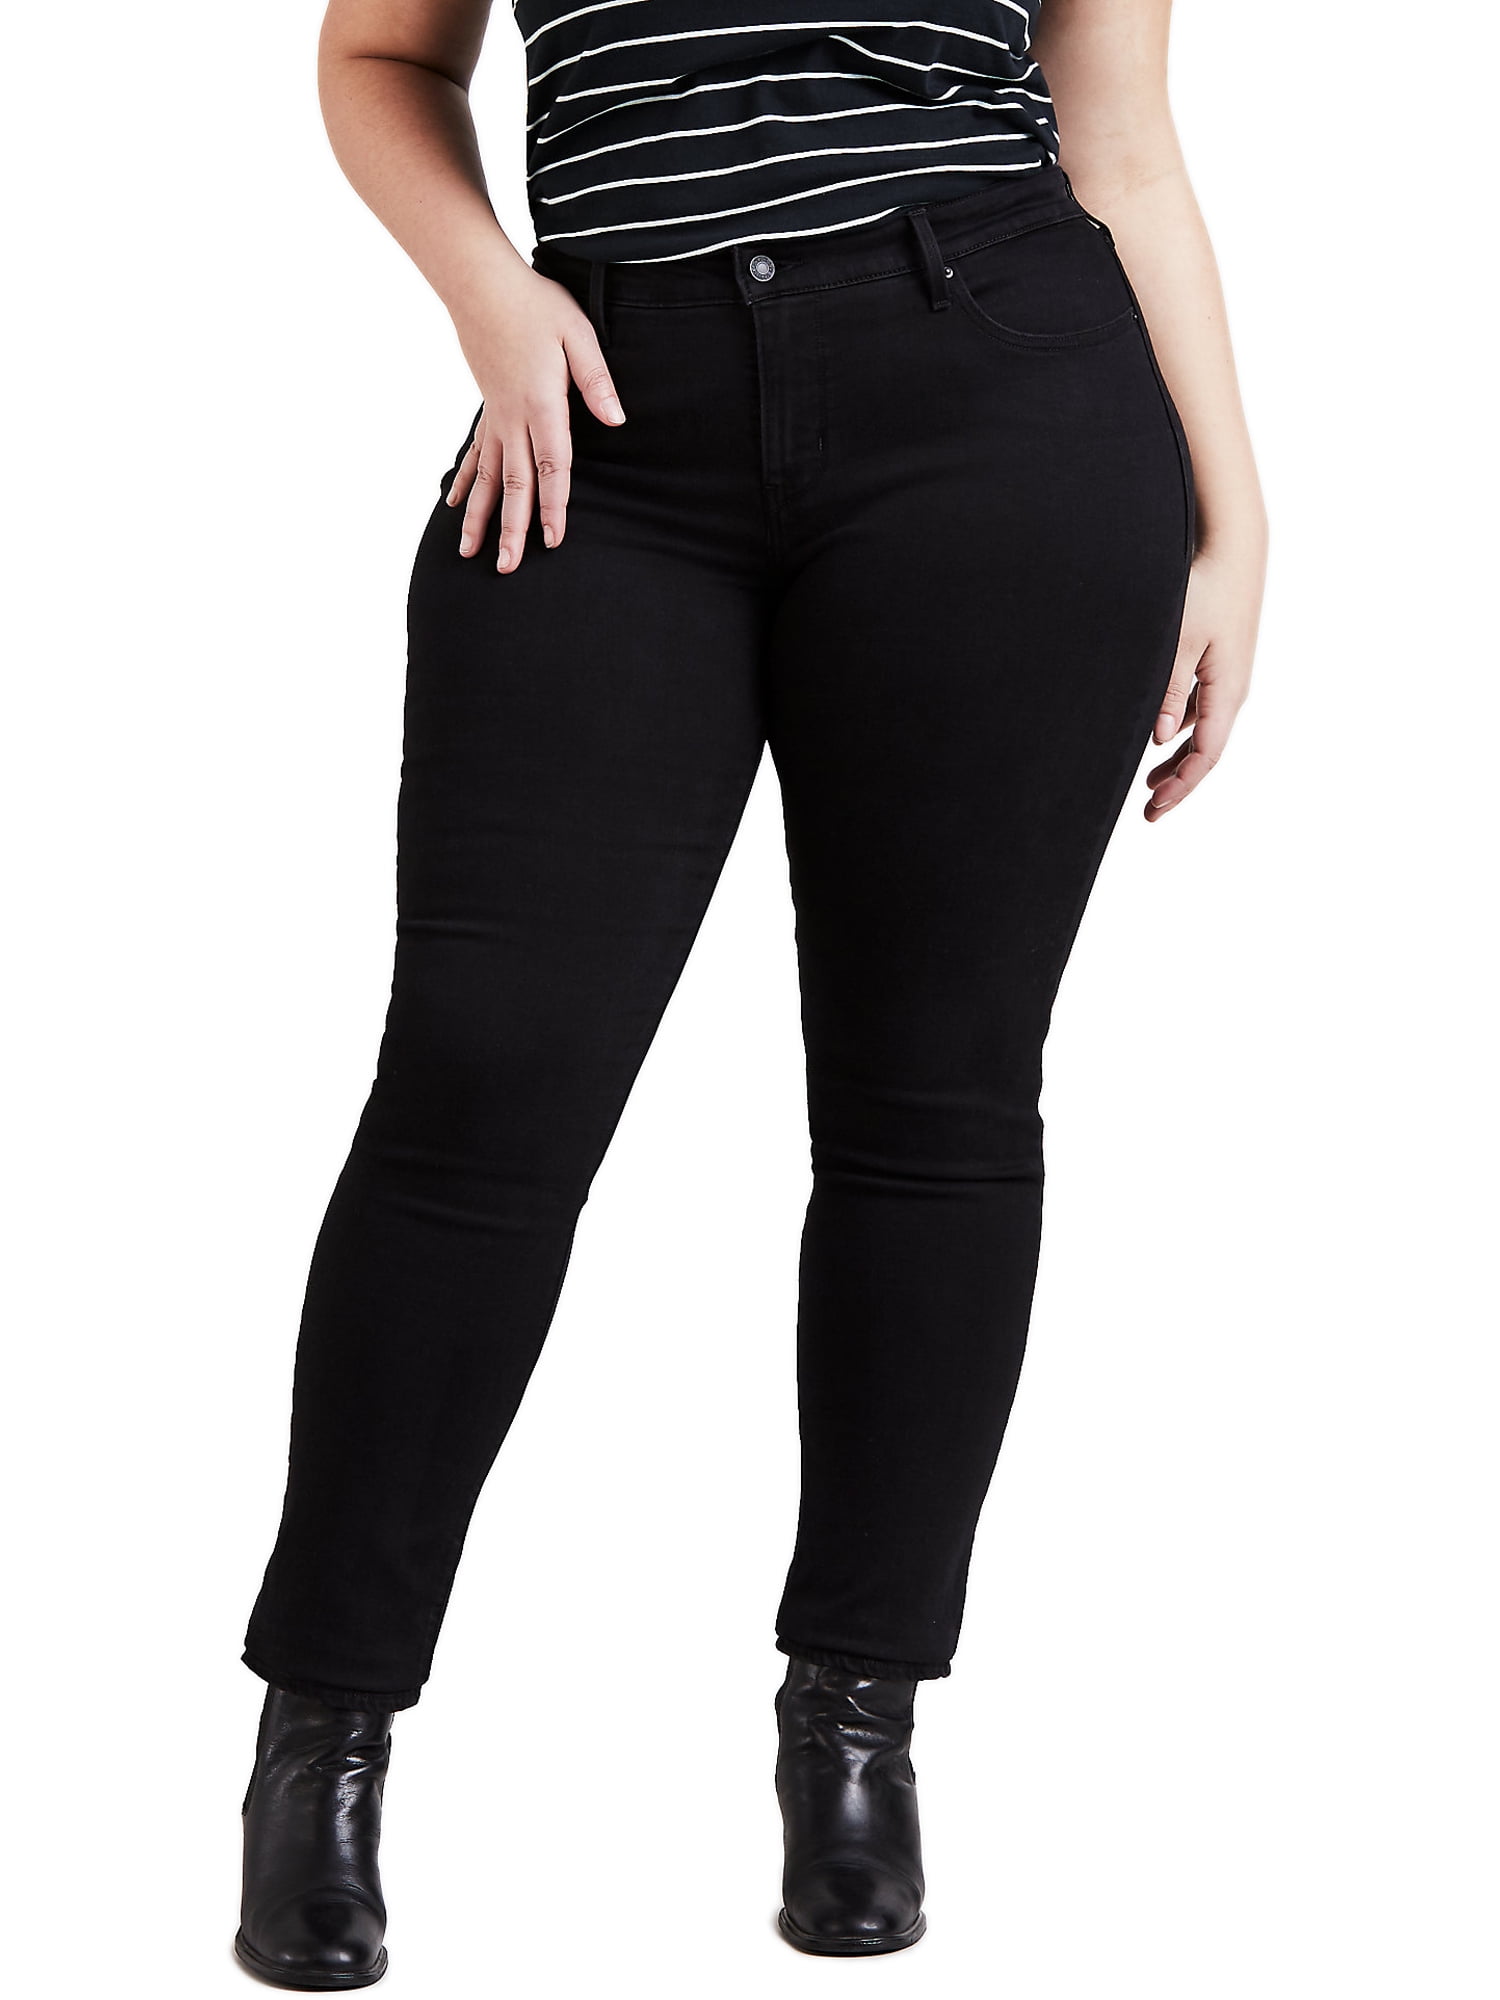 Levi S Levi S Women S 311 Shaping Skinny Jeans Walmart Com Walmart Com